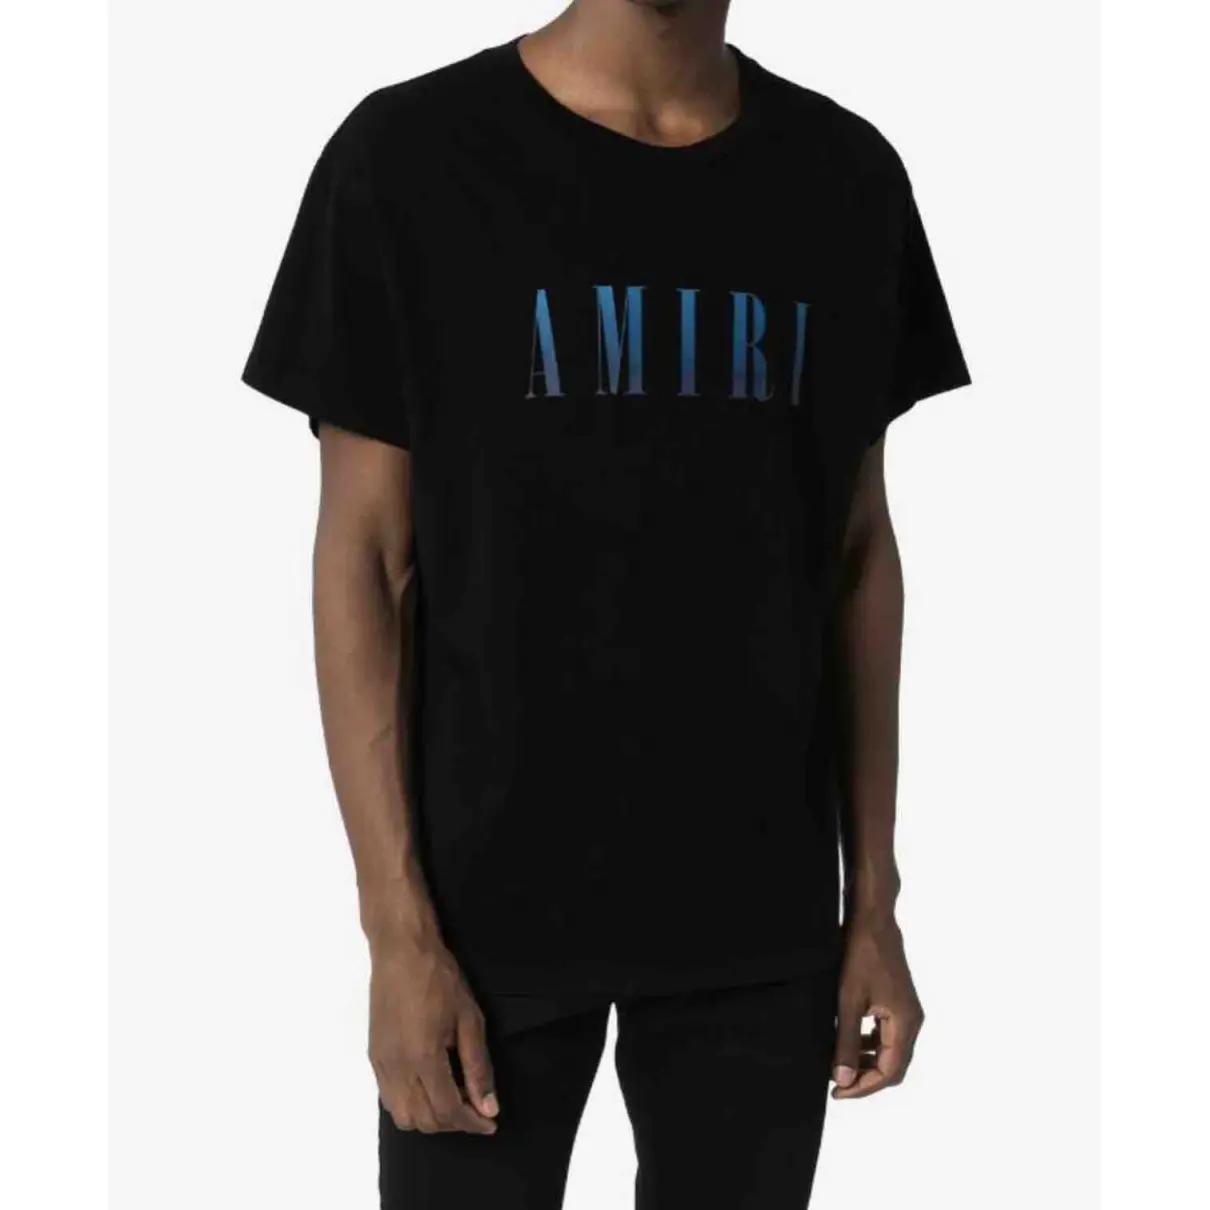 Black Cotton T-shirt Amiri